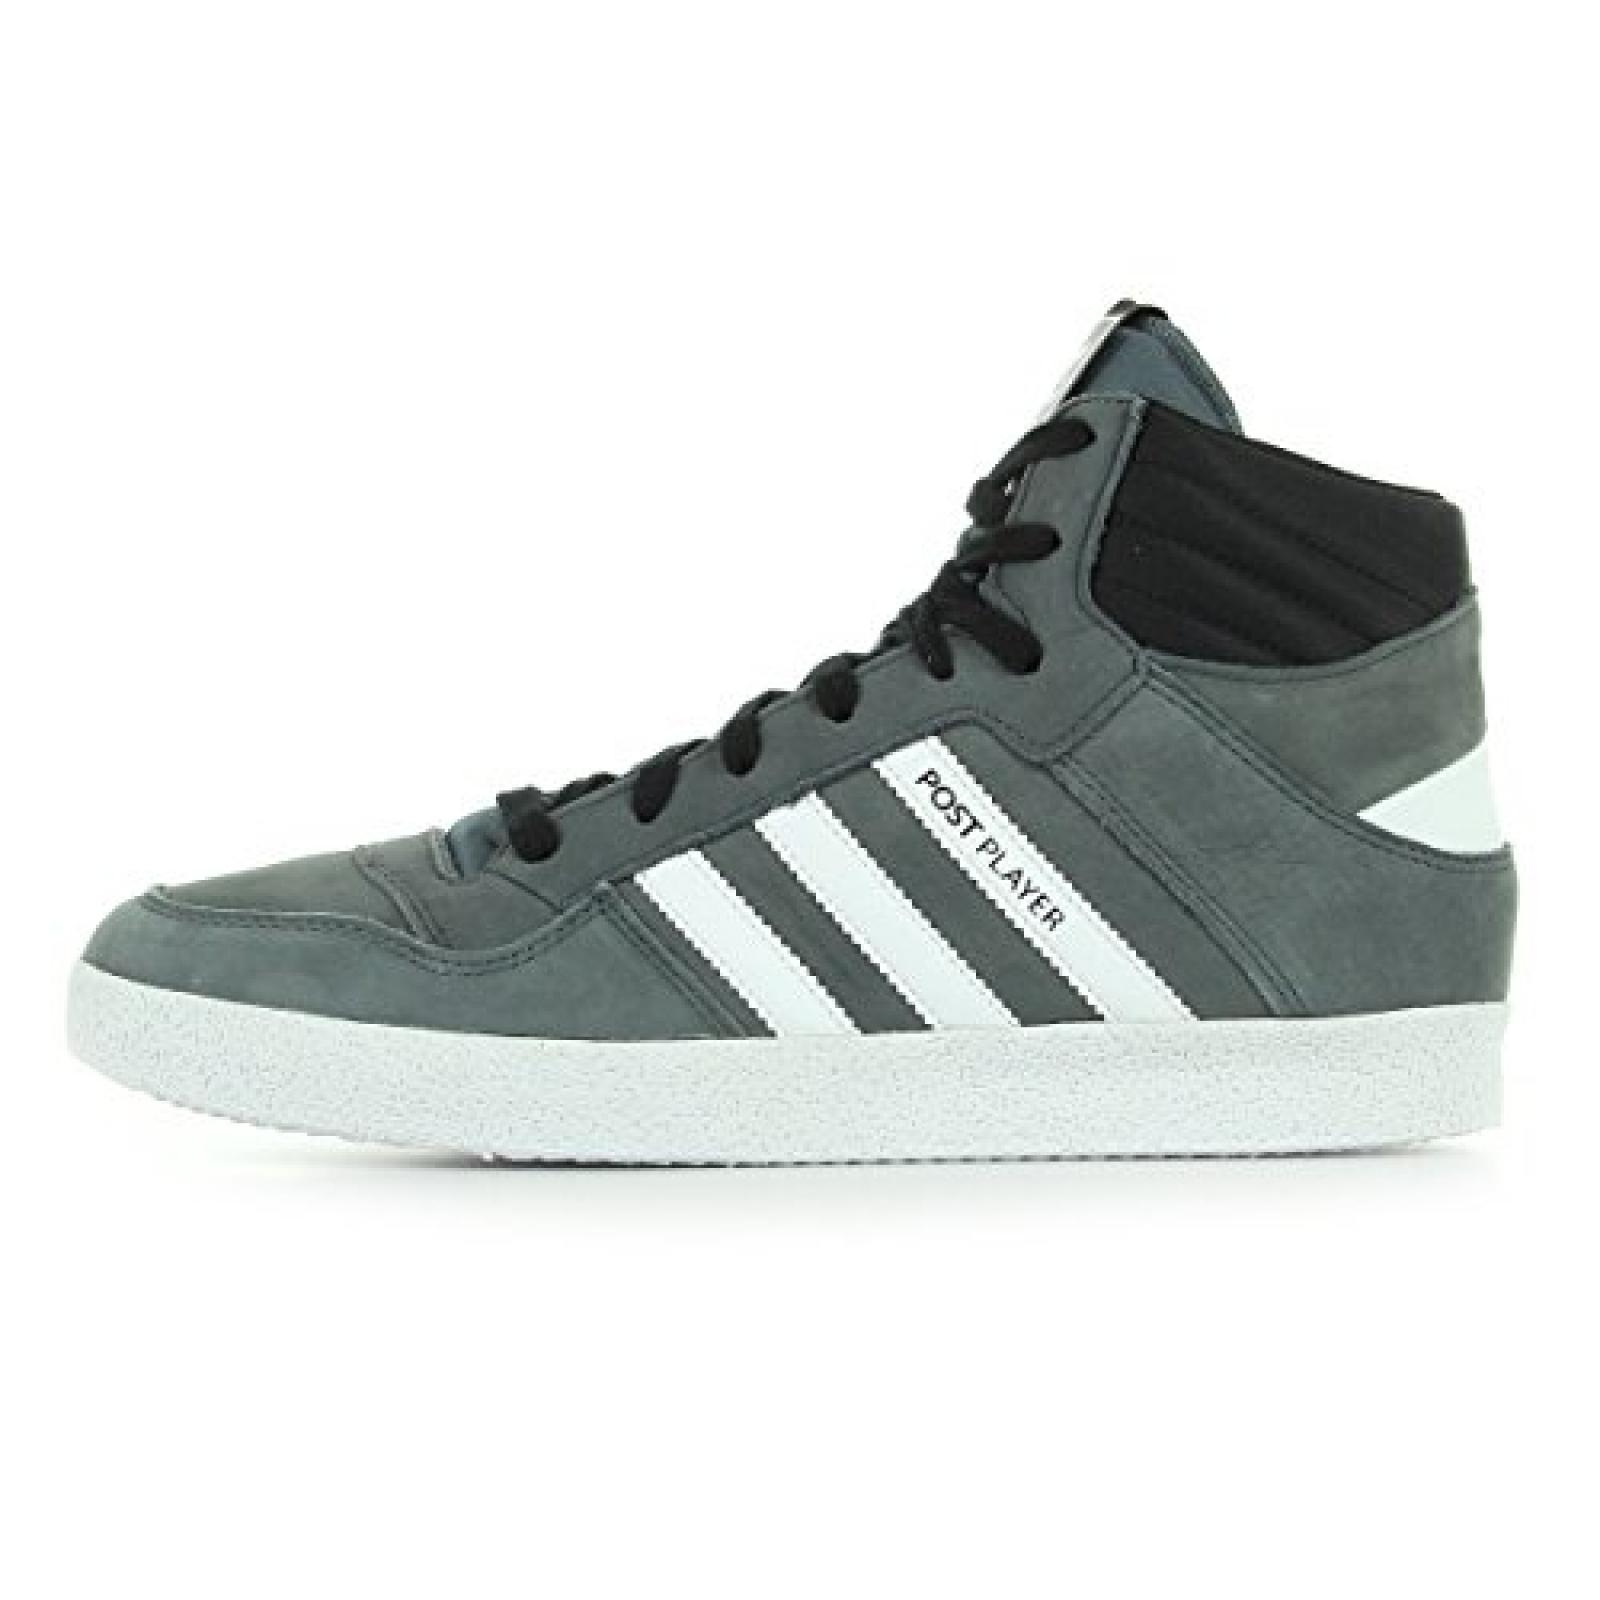 Adidas Post player vulc Q21986, Herren Sneaker 